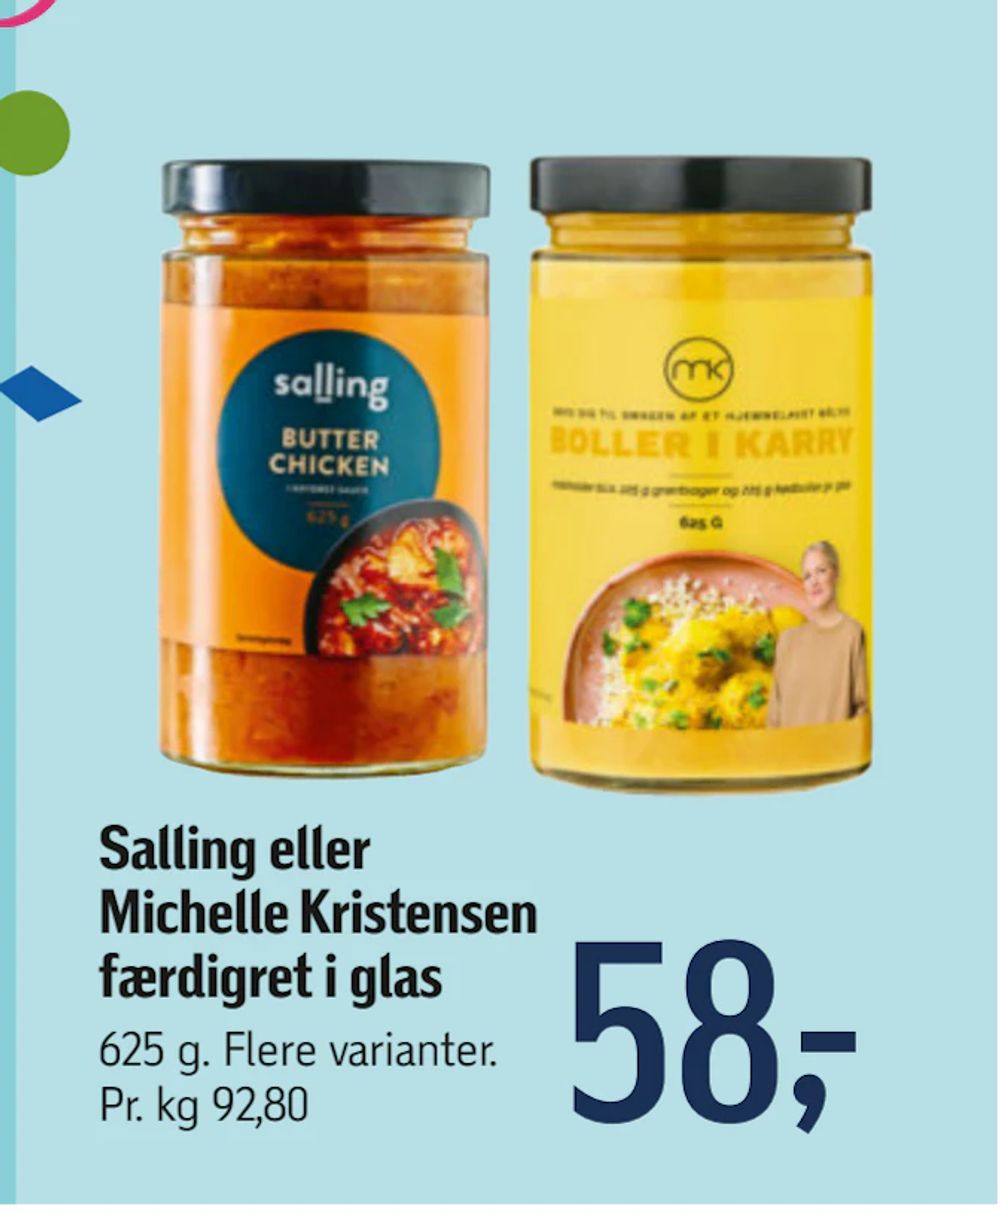 Tilbud på Salling eller Michelle Kristensen færdigret i glas fra føtex til 58 kr.